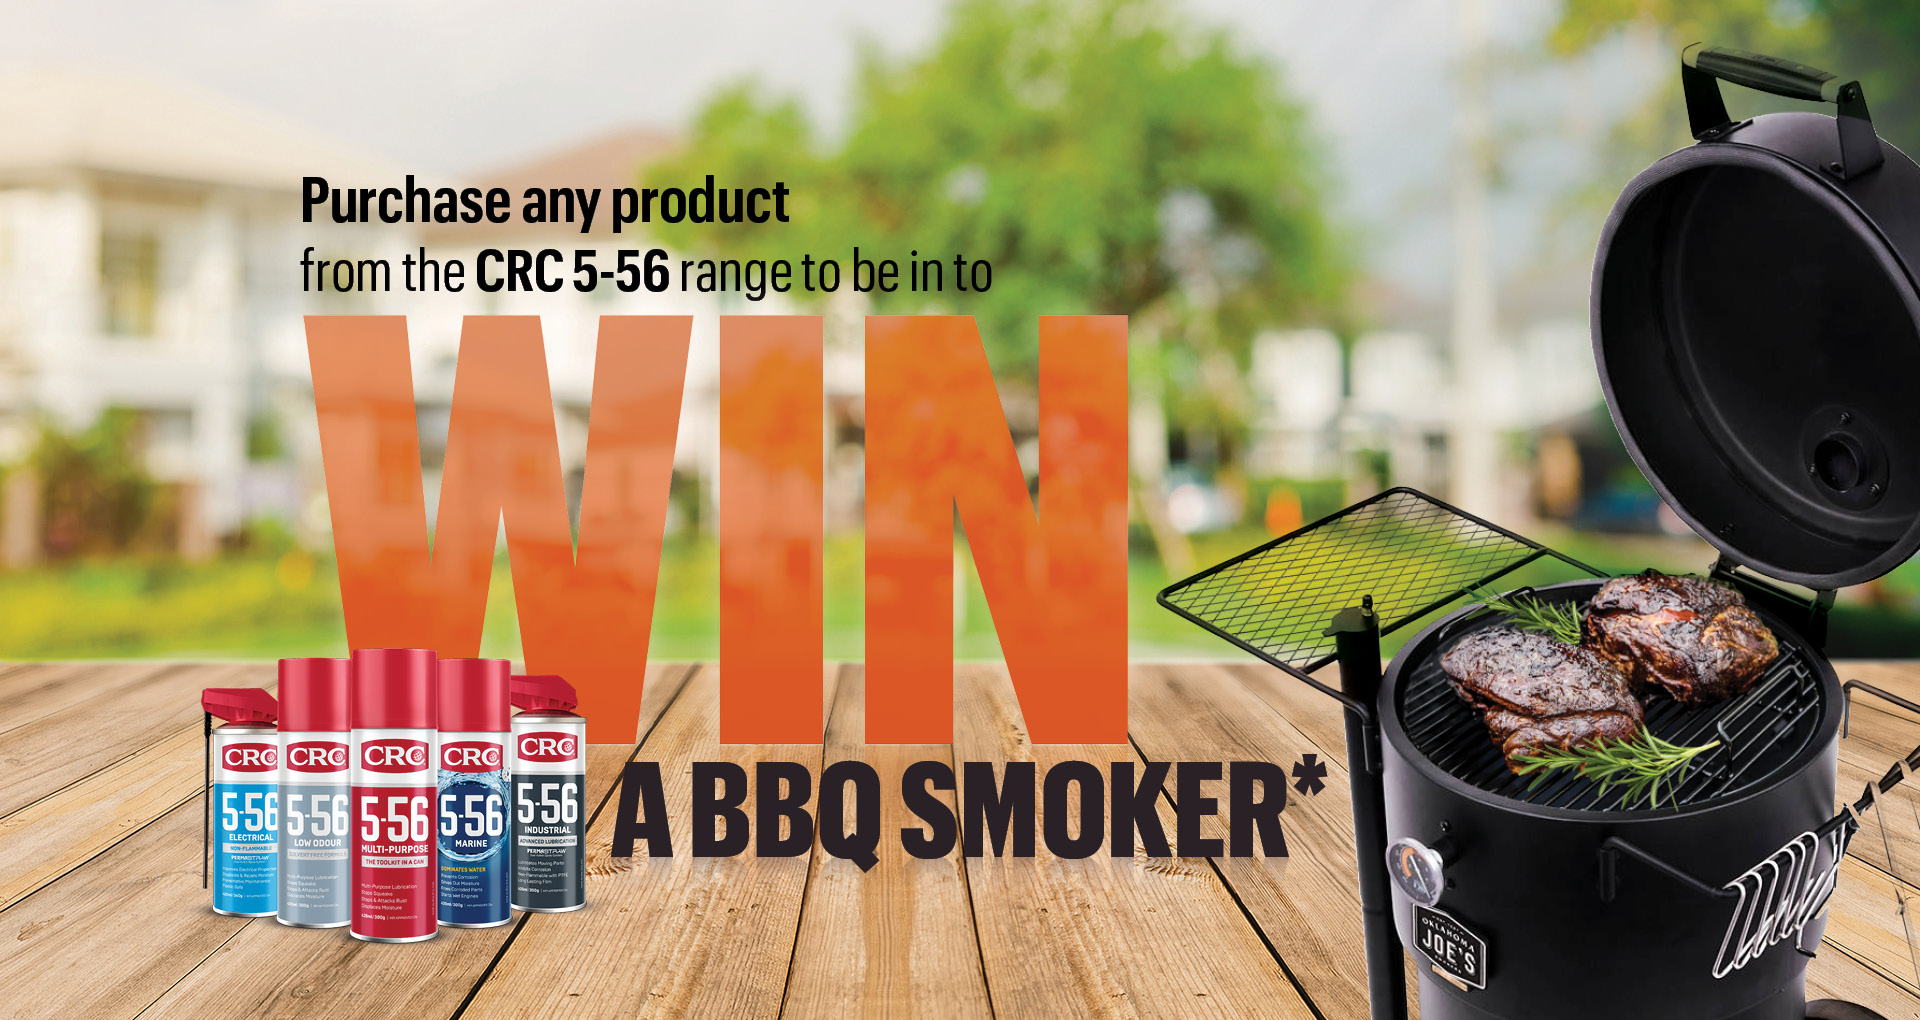 CRC 5-56 BBQ Smoker Prize Draw